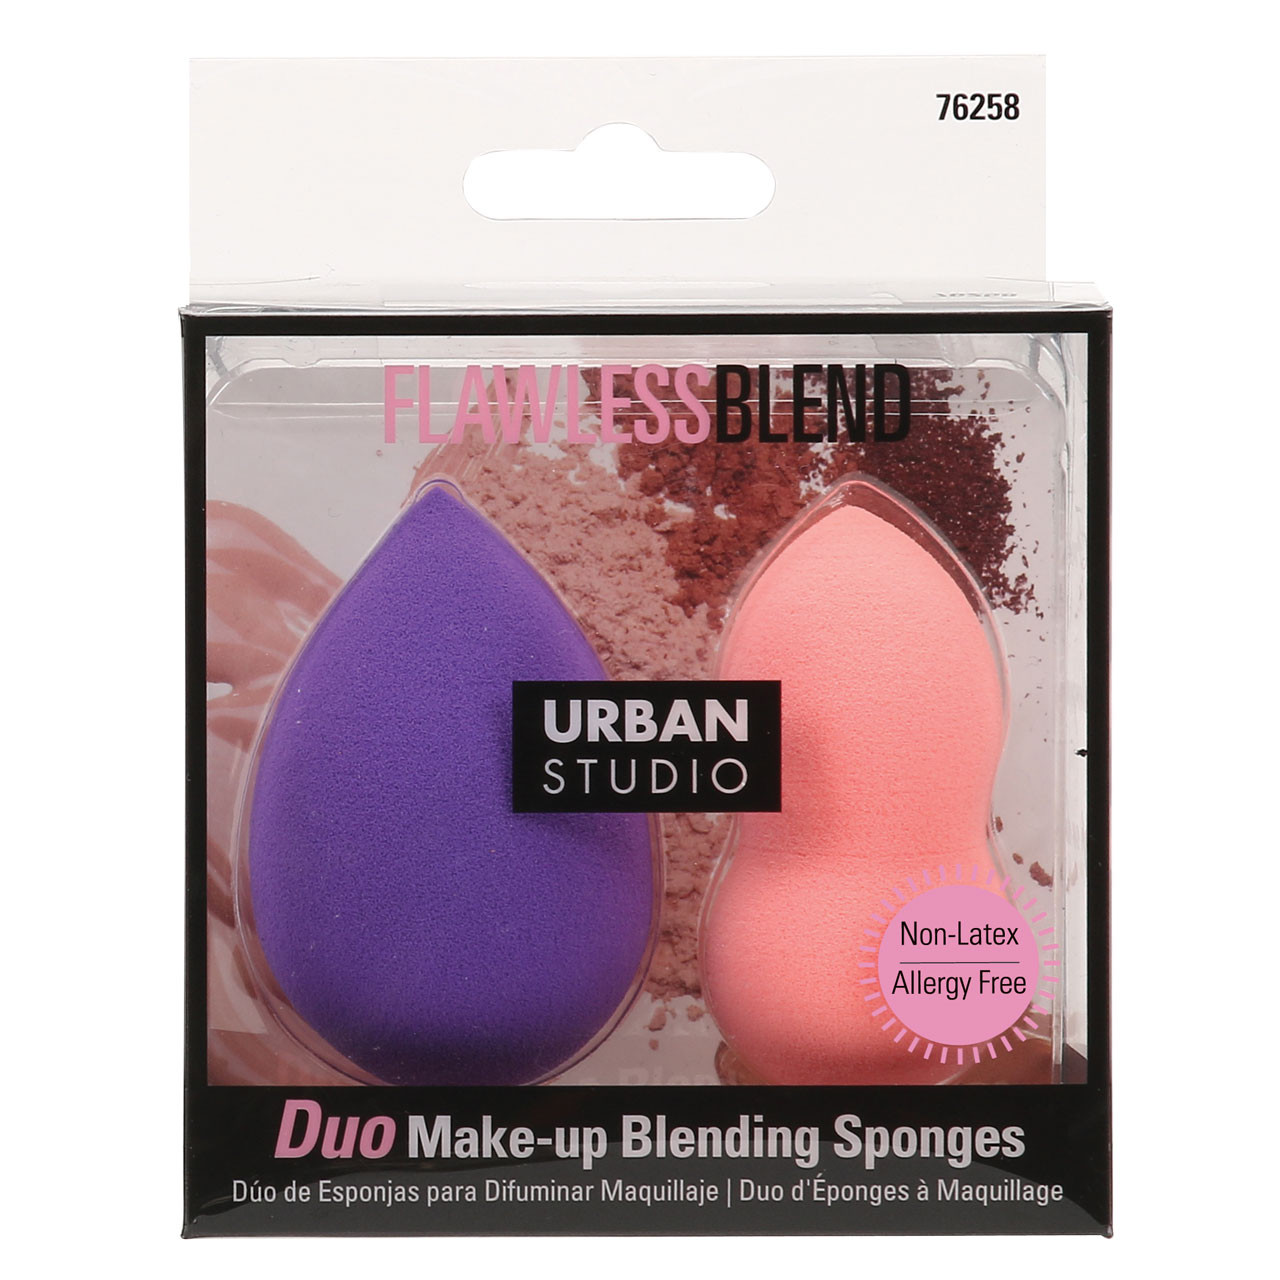 Heart Blending Sponge Makeup Applicators and Tools in Pink | Colourpop